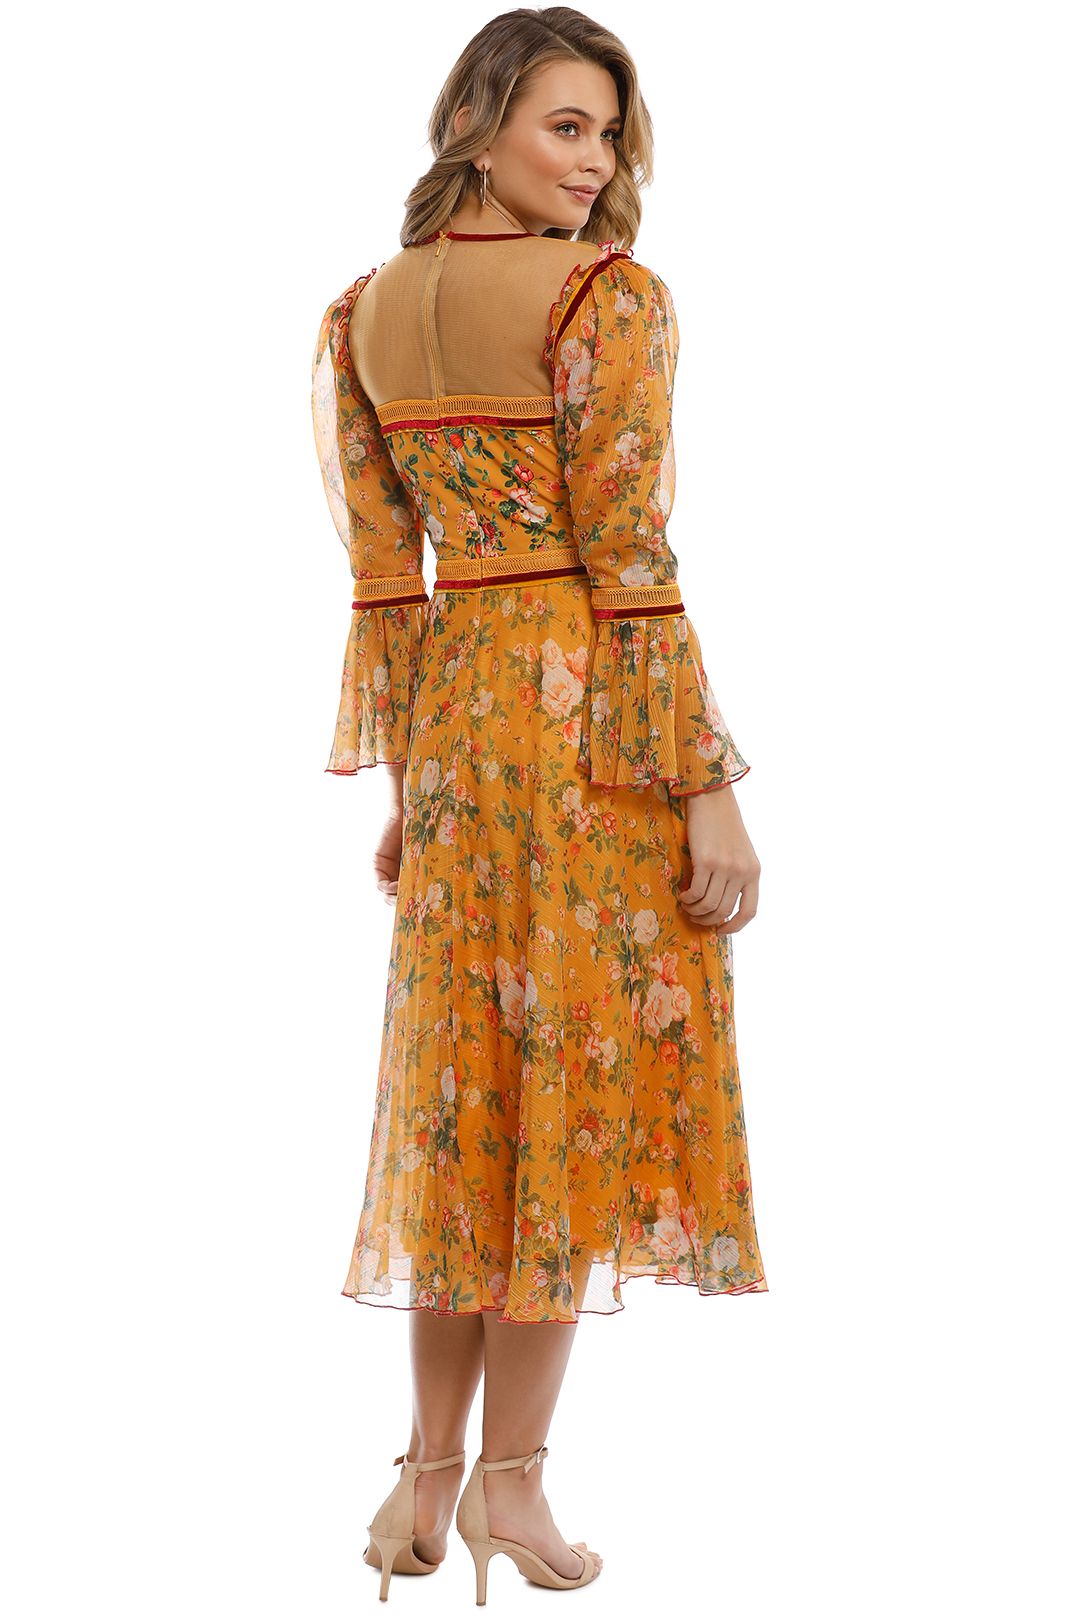 Tadashi Shoji - Toussaint Tea Length Dress - Mustard Yellow - Back